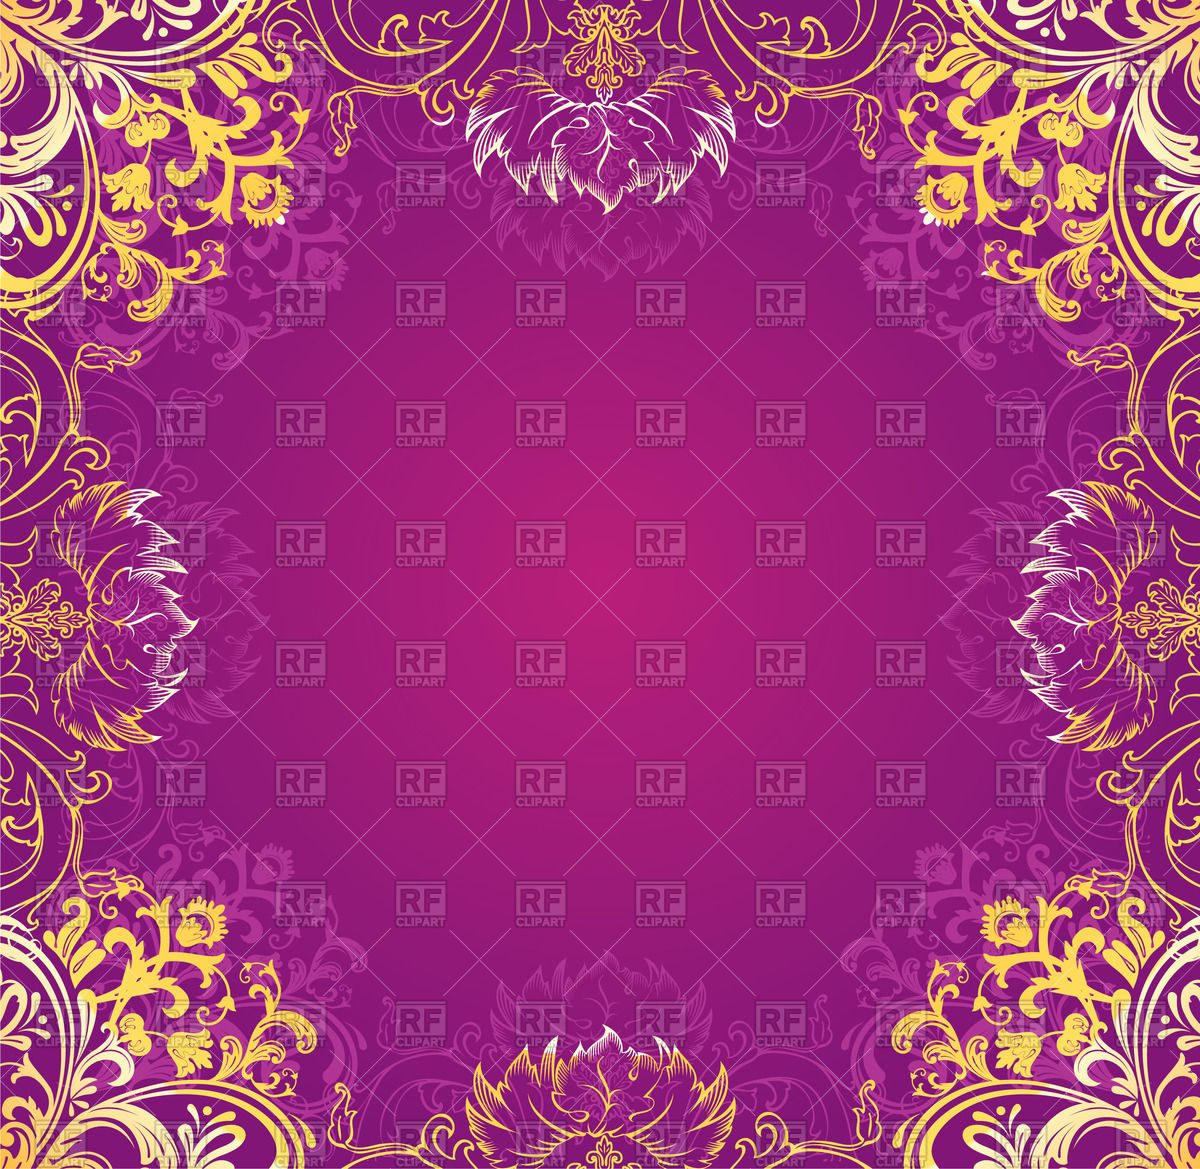 Violet background clipart.